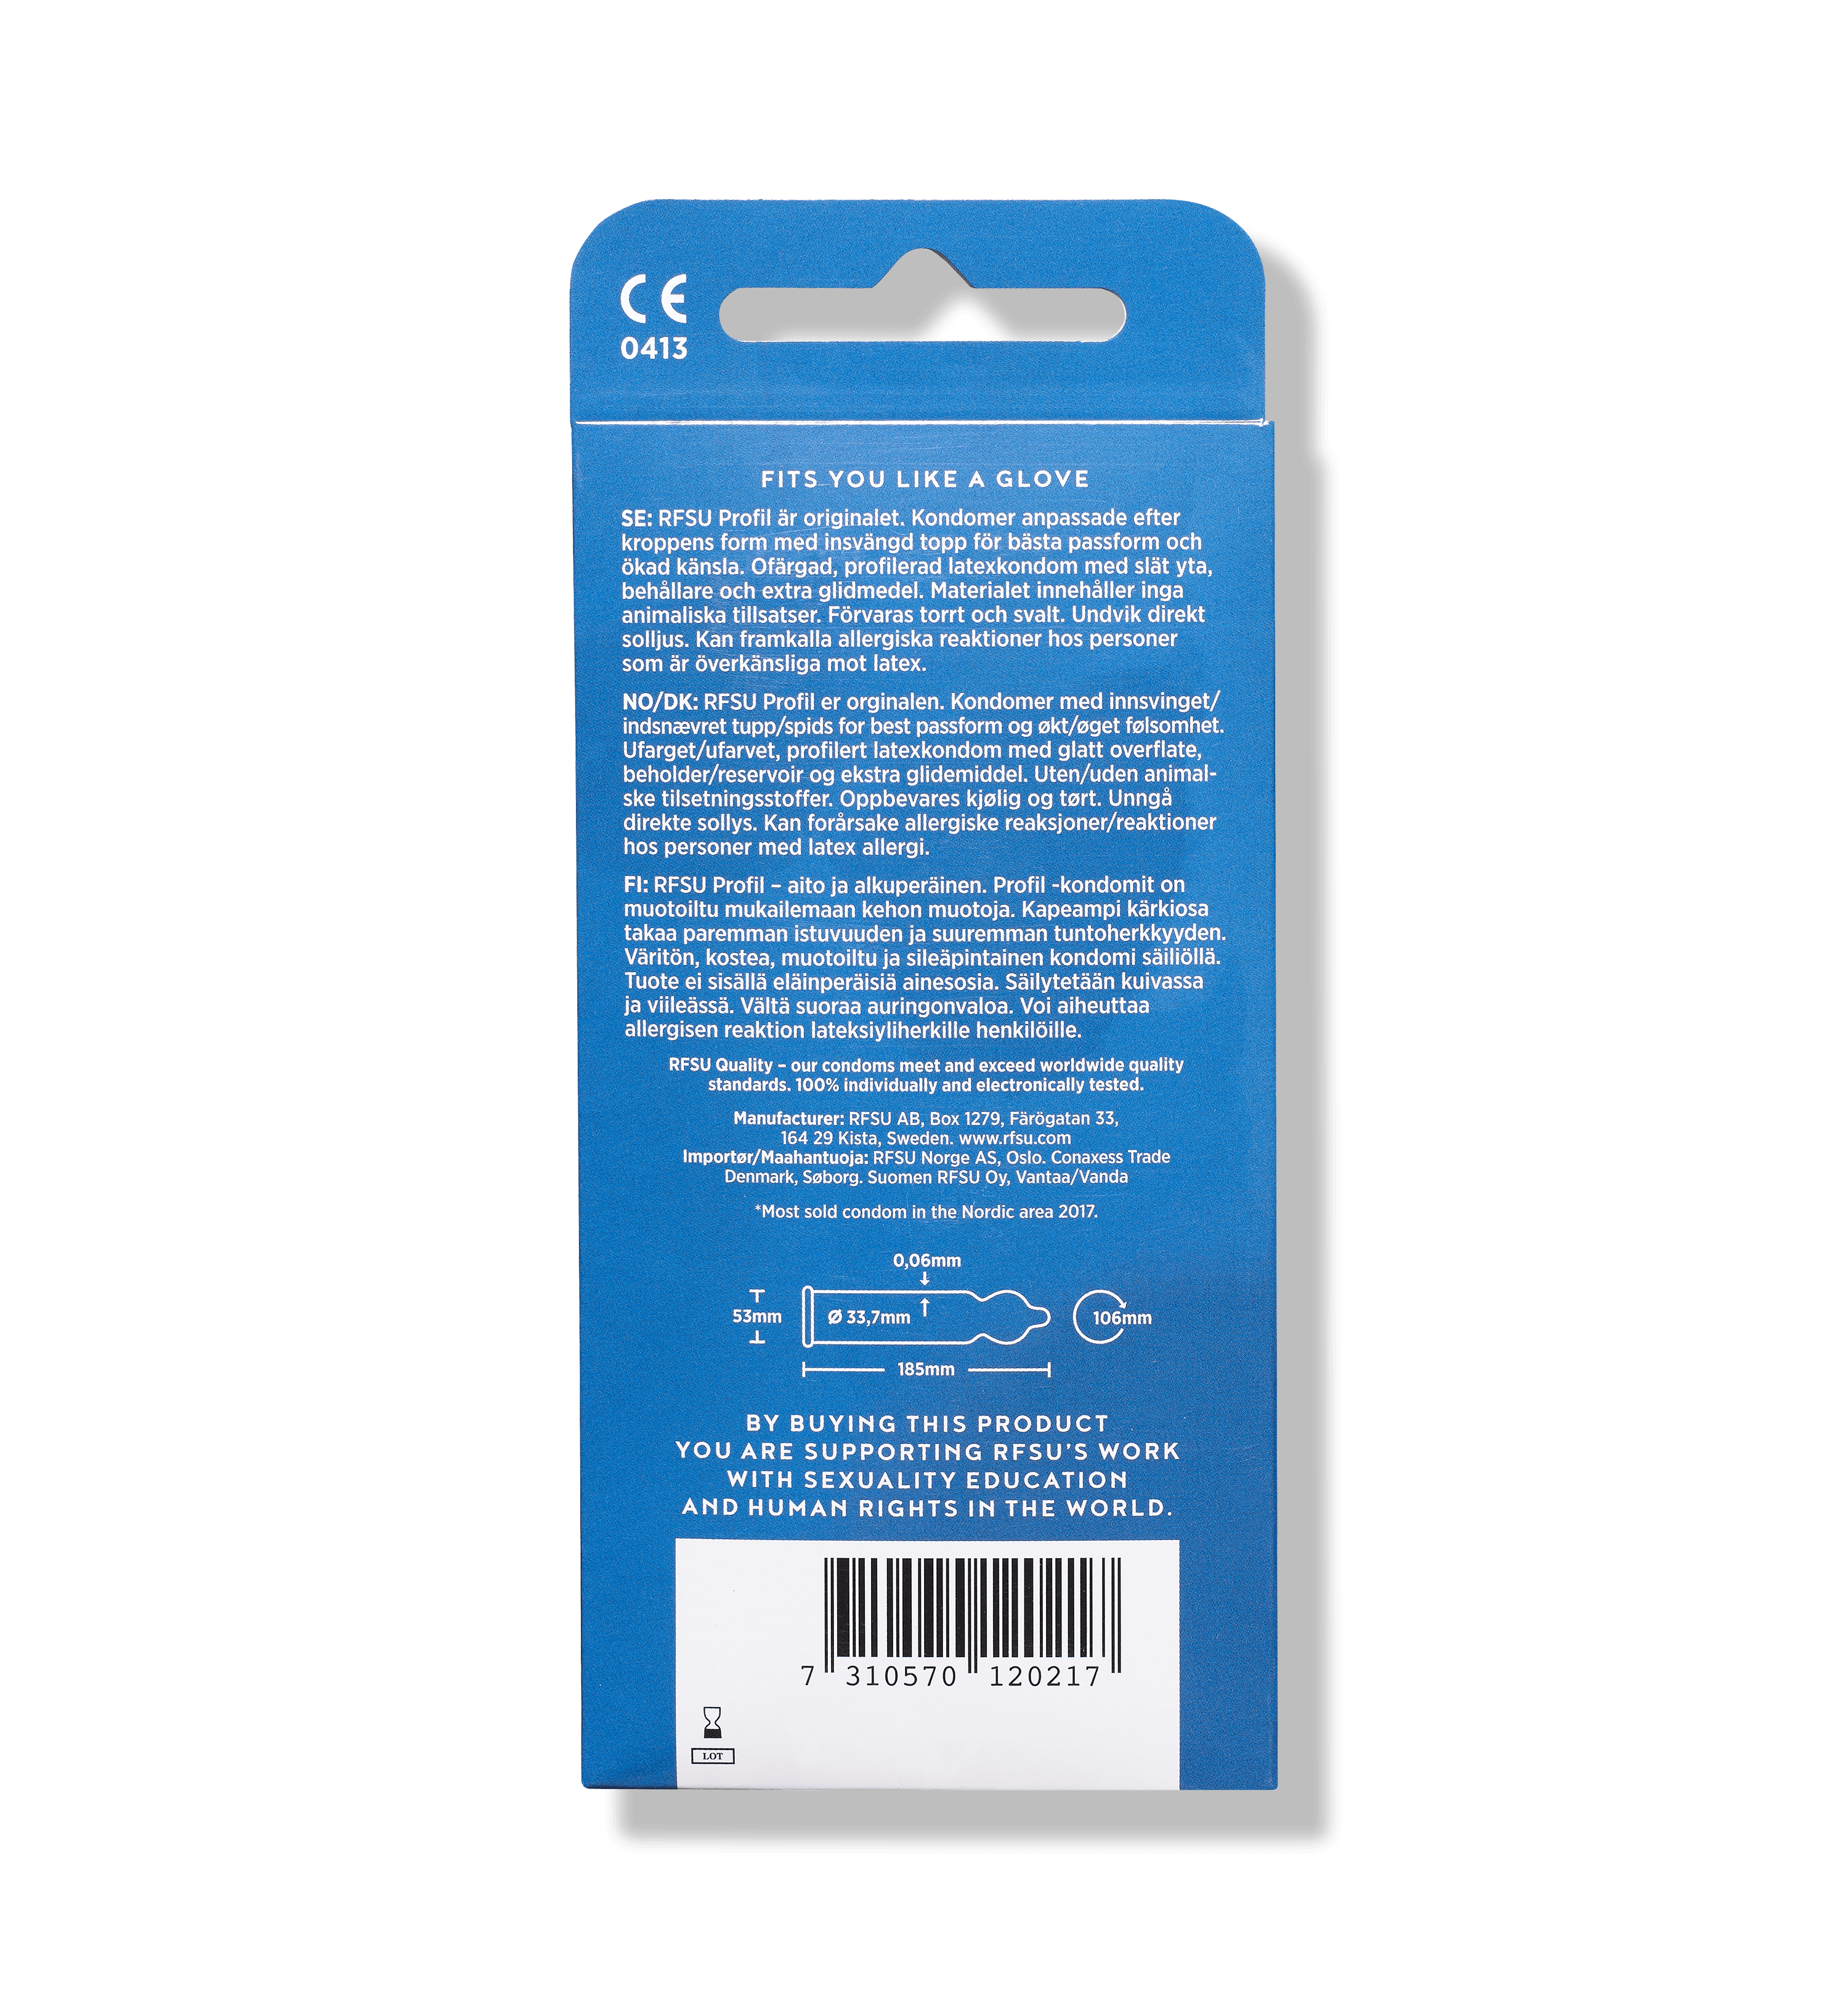 RFSU kondomer Profil 10-pakning